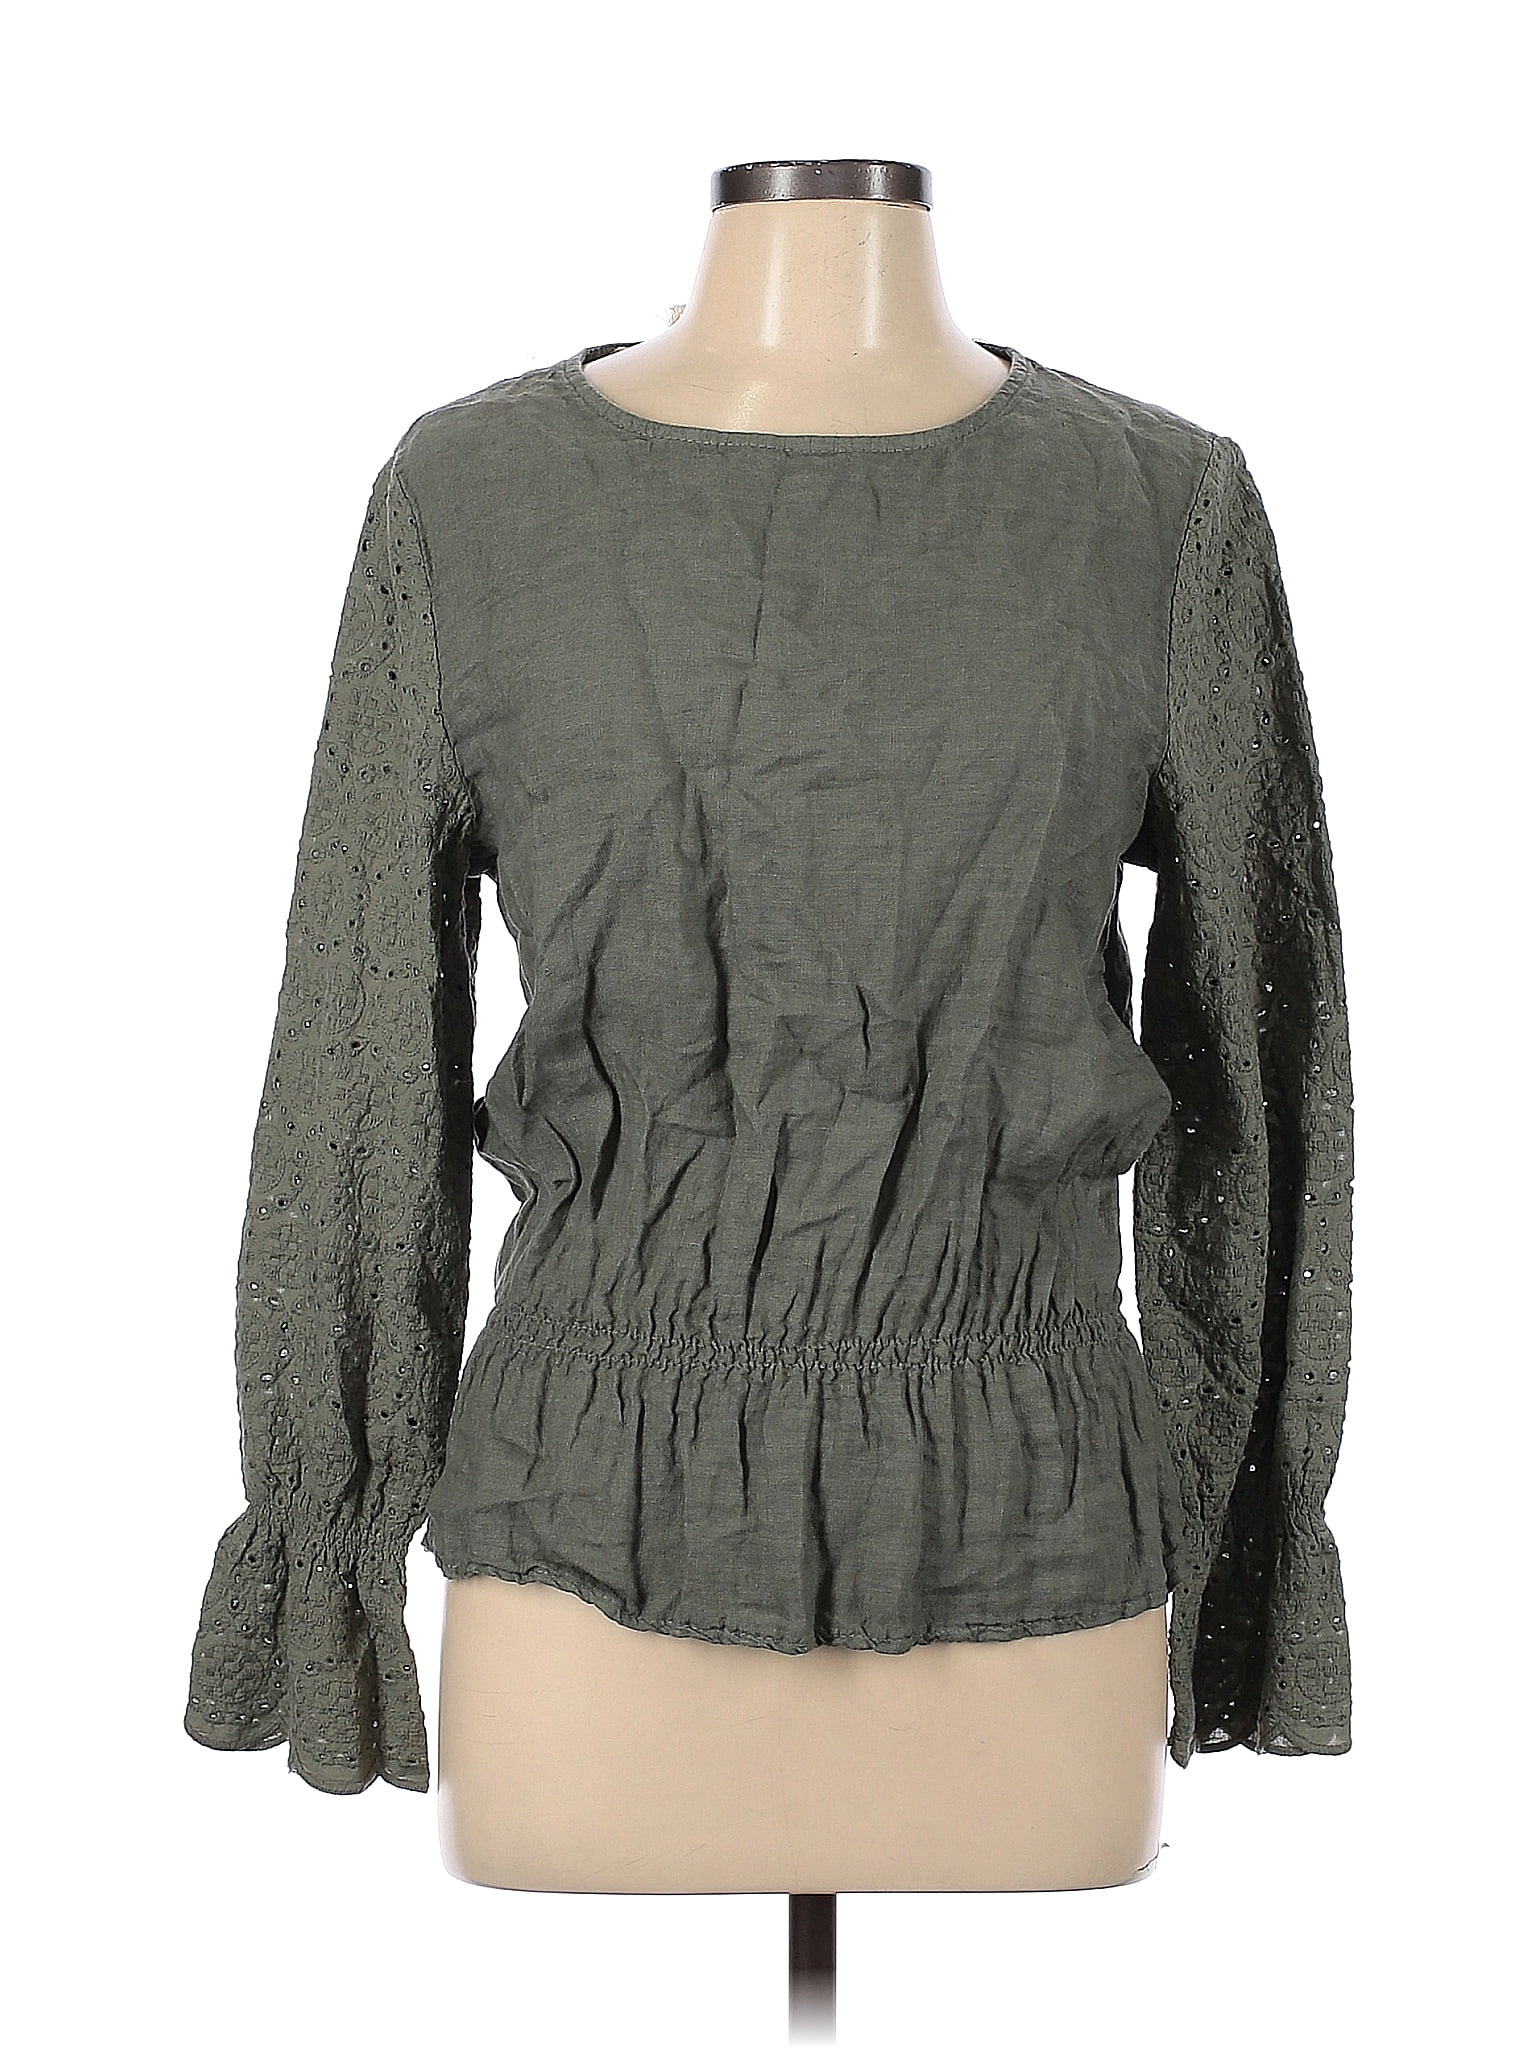 Francesca Bettini 100% Linen Solid Green Long Sleeve Blouse Size L - 68 ...